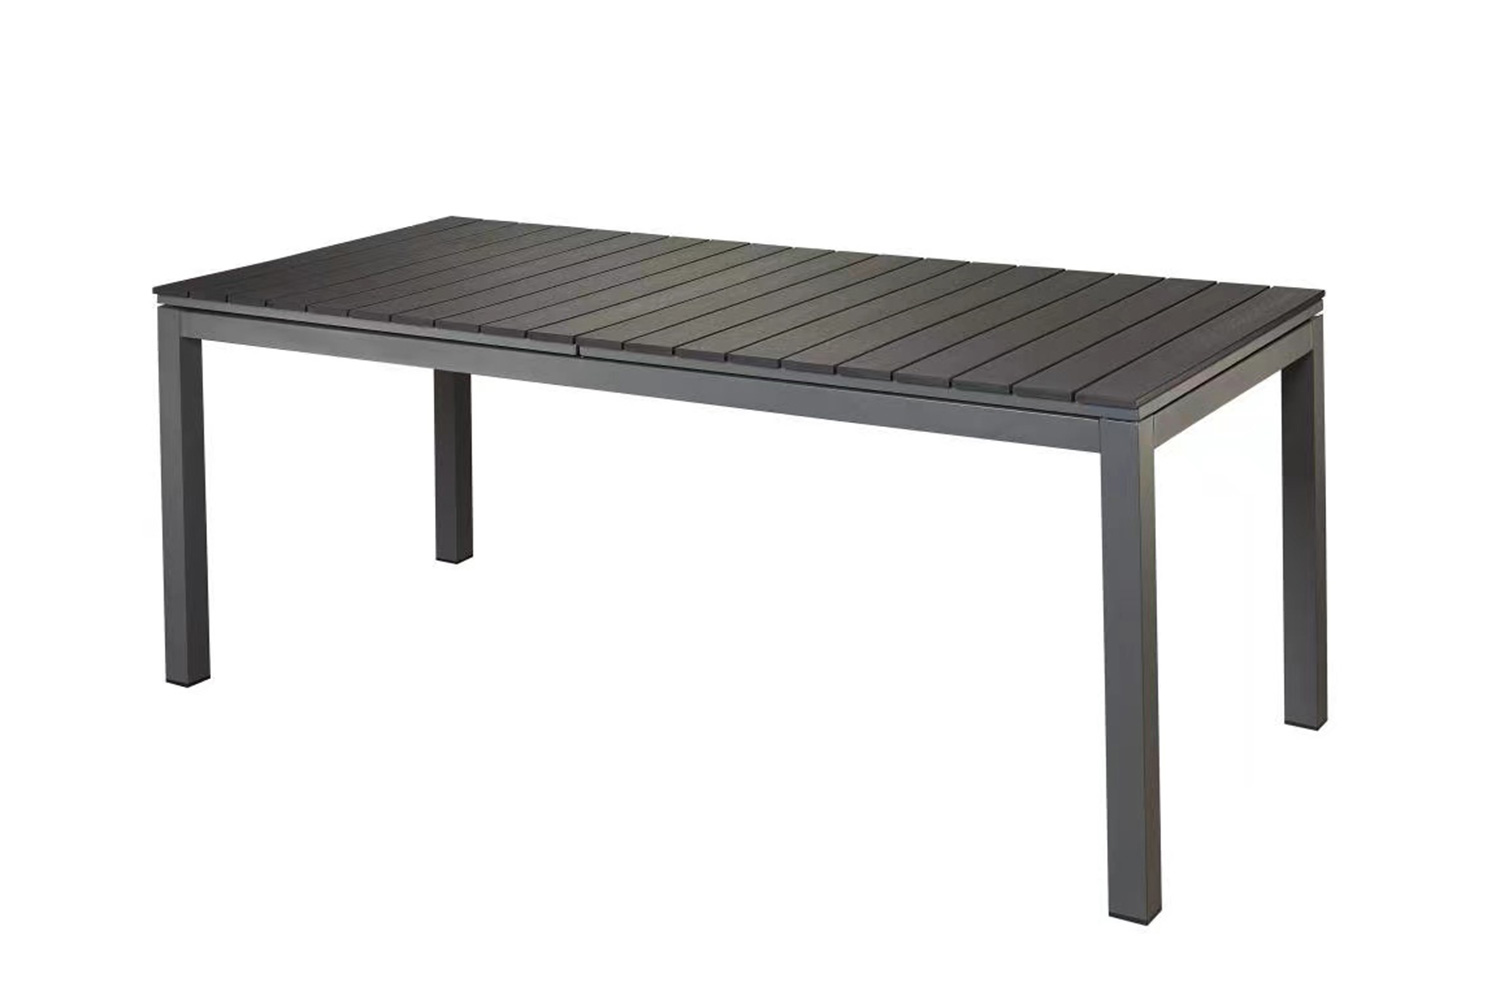 Table Square: 240cm x 100cm x 75cm - стол коричневый